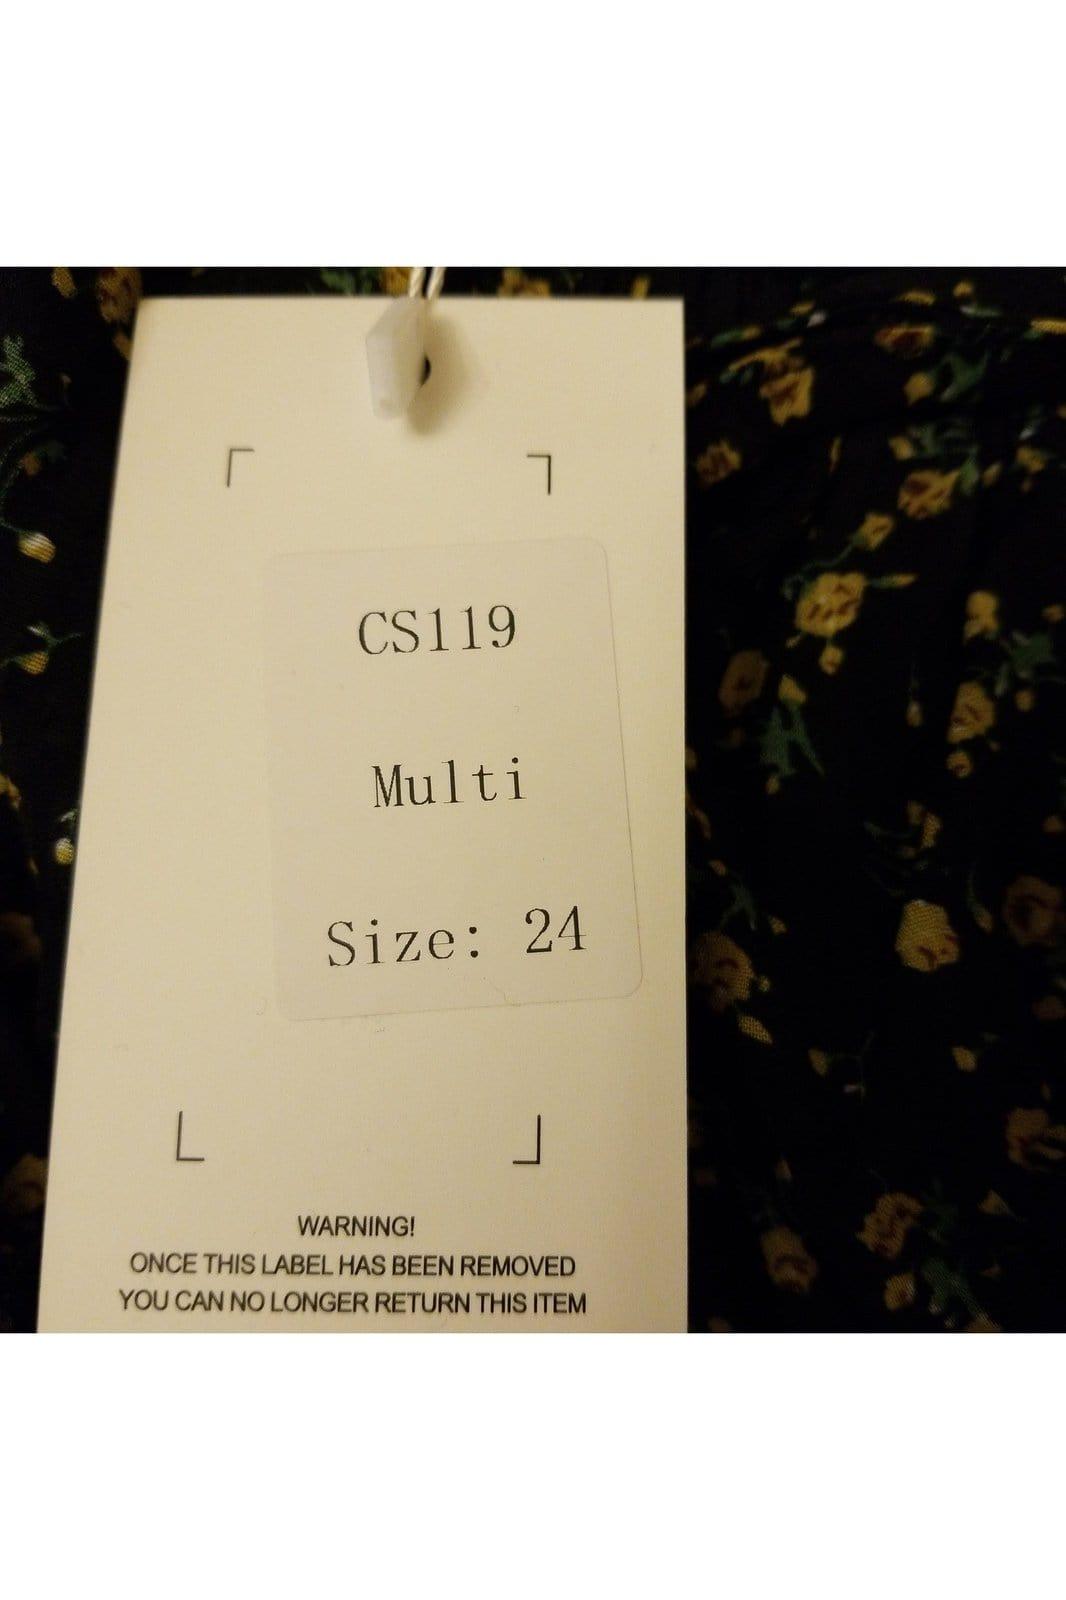 Saint Genies women's multi blouse size 20